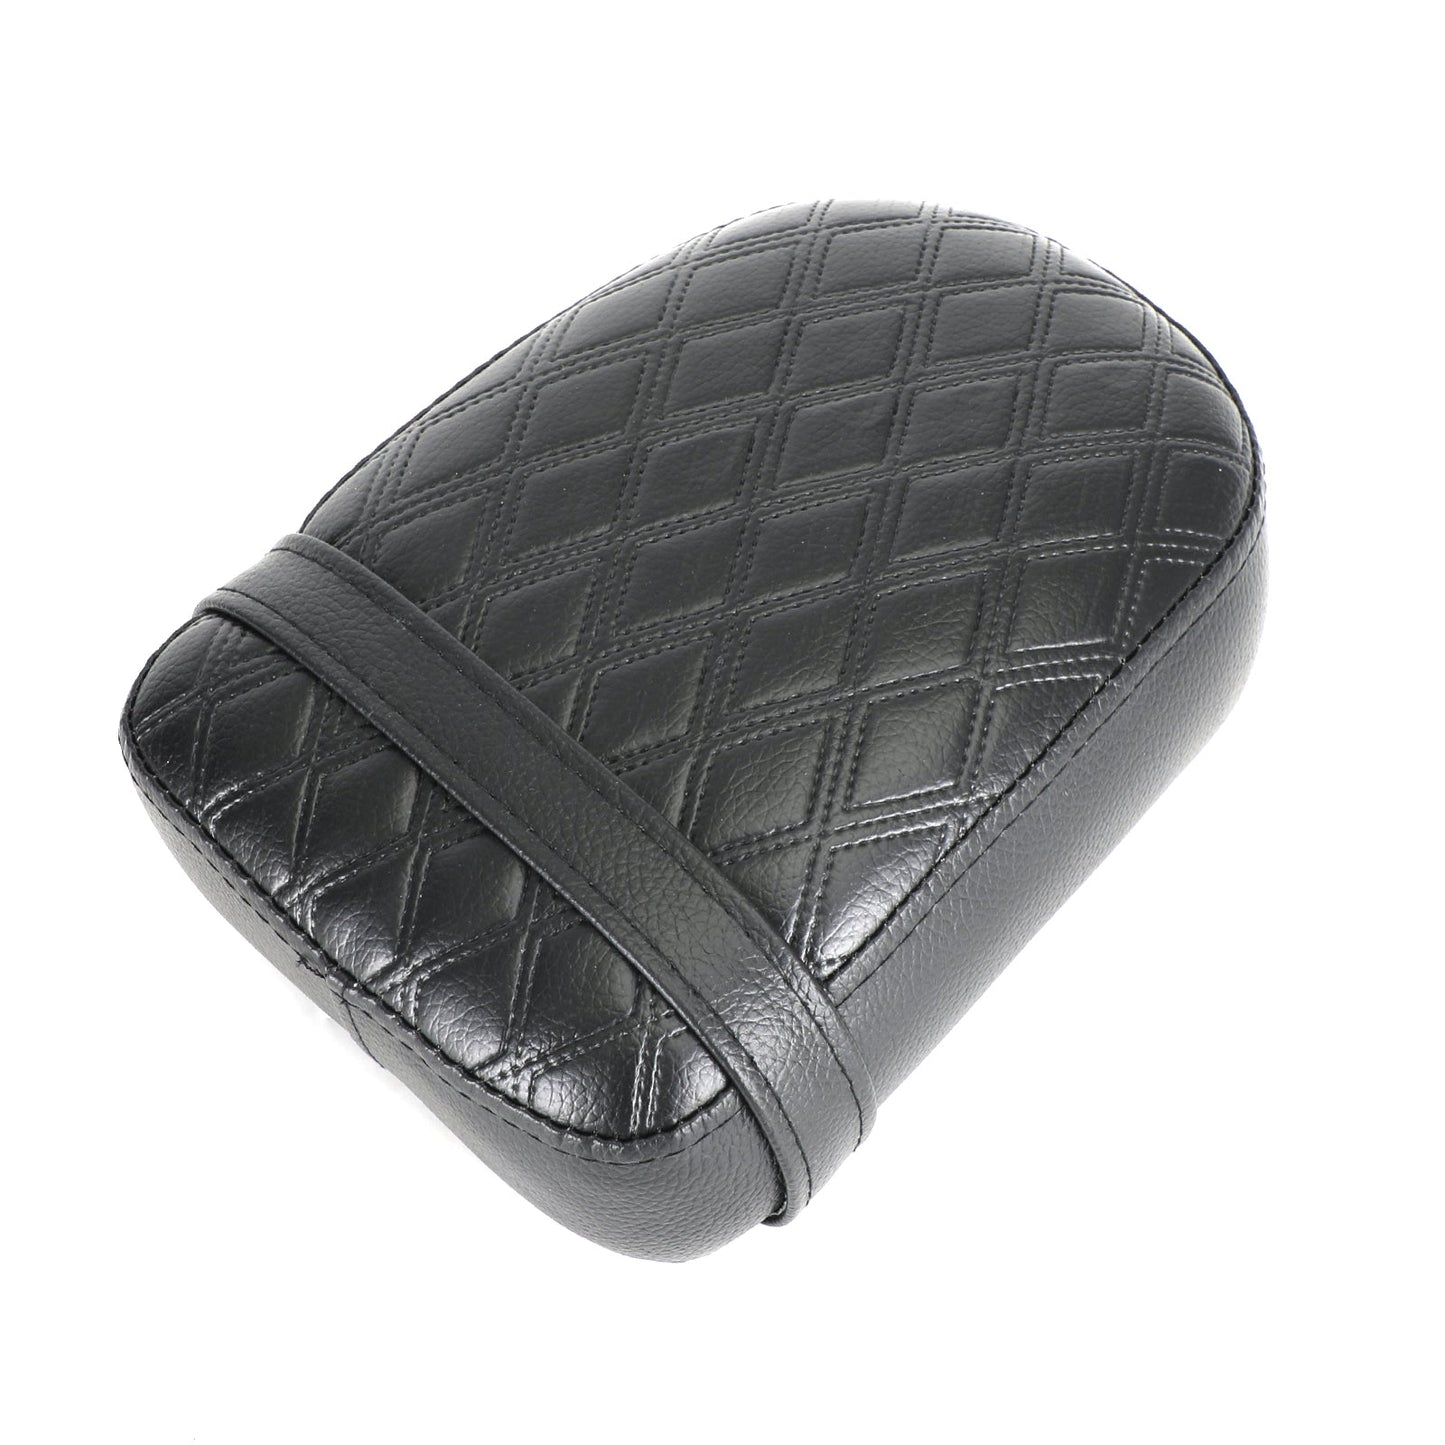 Thicken Rear Seat Passenger Cushion Black Fit For Honda Rebel Cmx 500 300 17-21